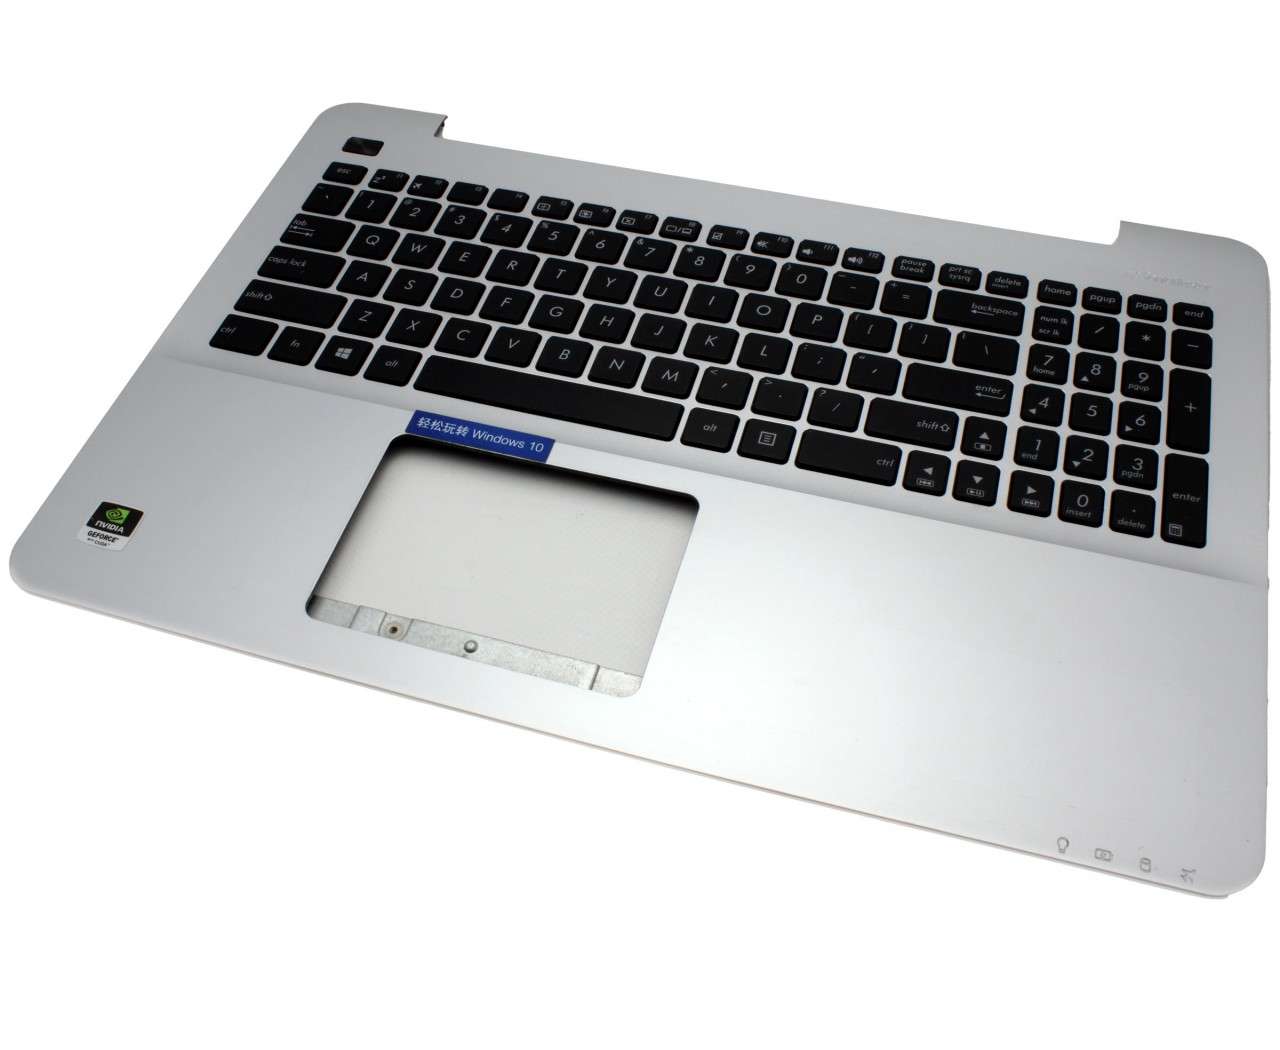 Tastatura Asus 0KN0-R91US23 Neagra cu Palmrest argintiu